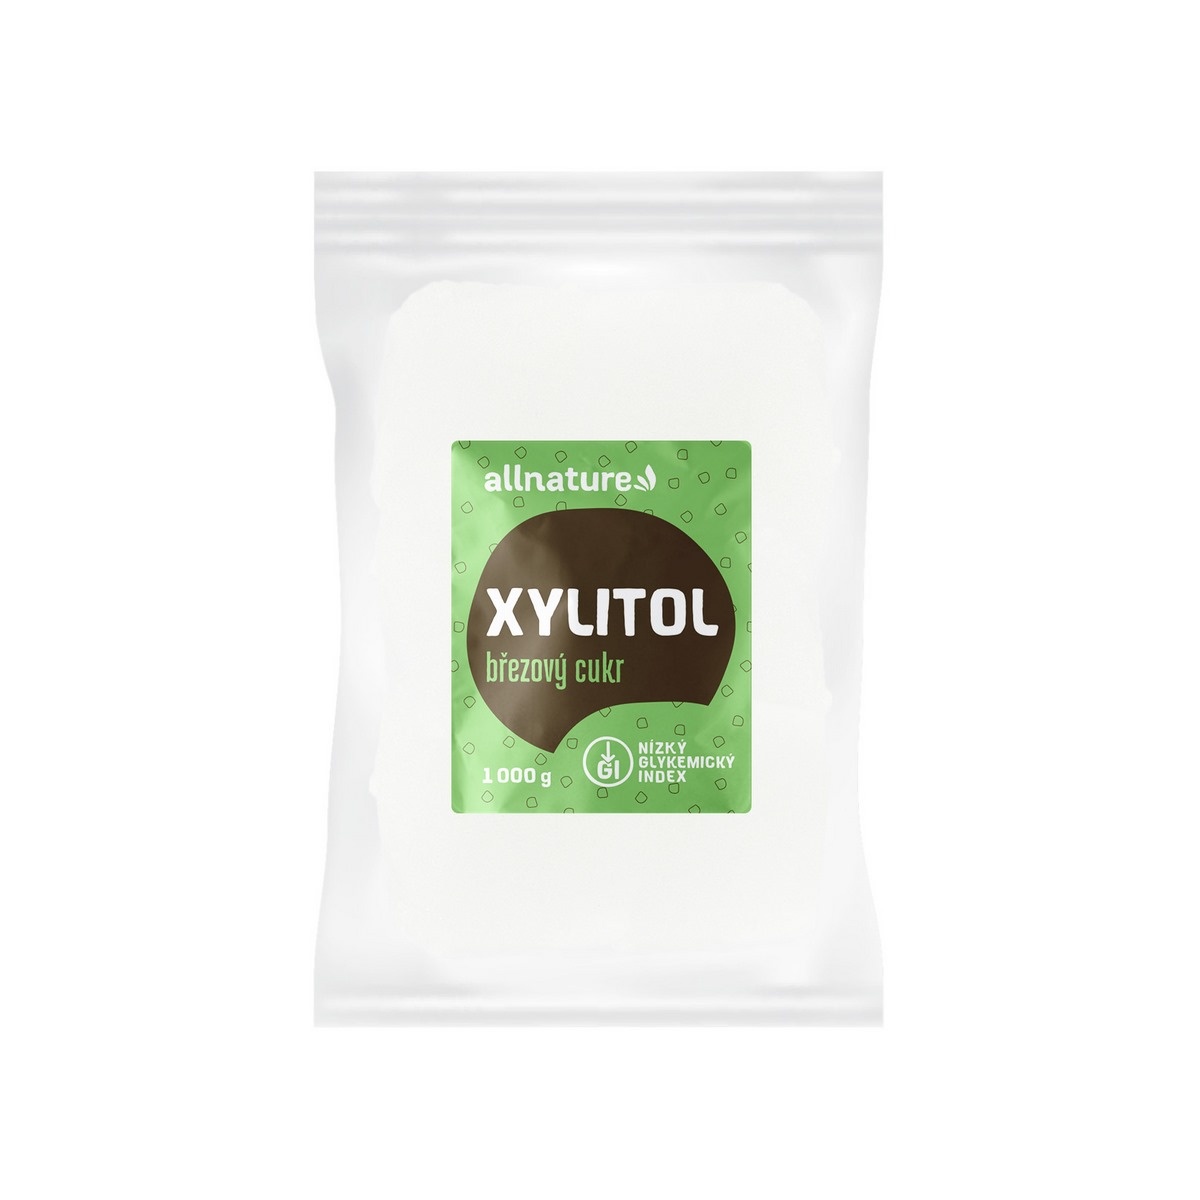 Allnature Xylitol - brezový cukor, 1 kg